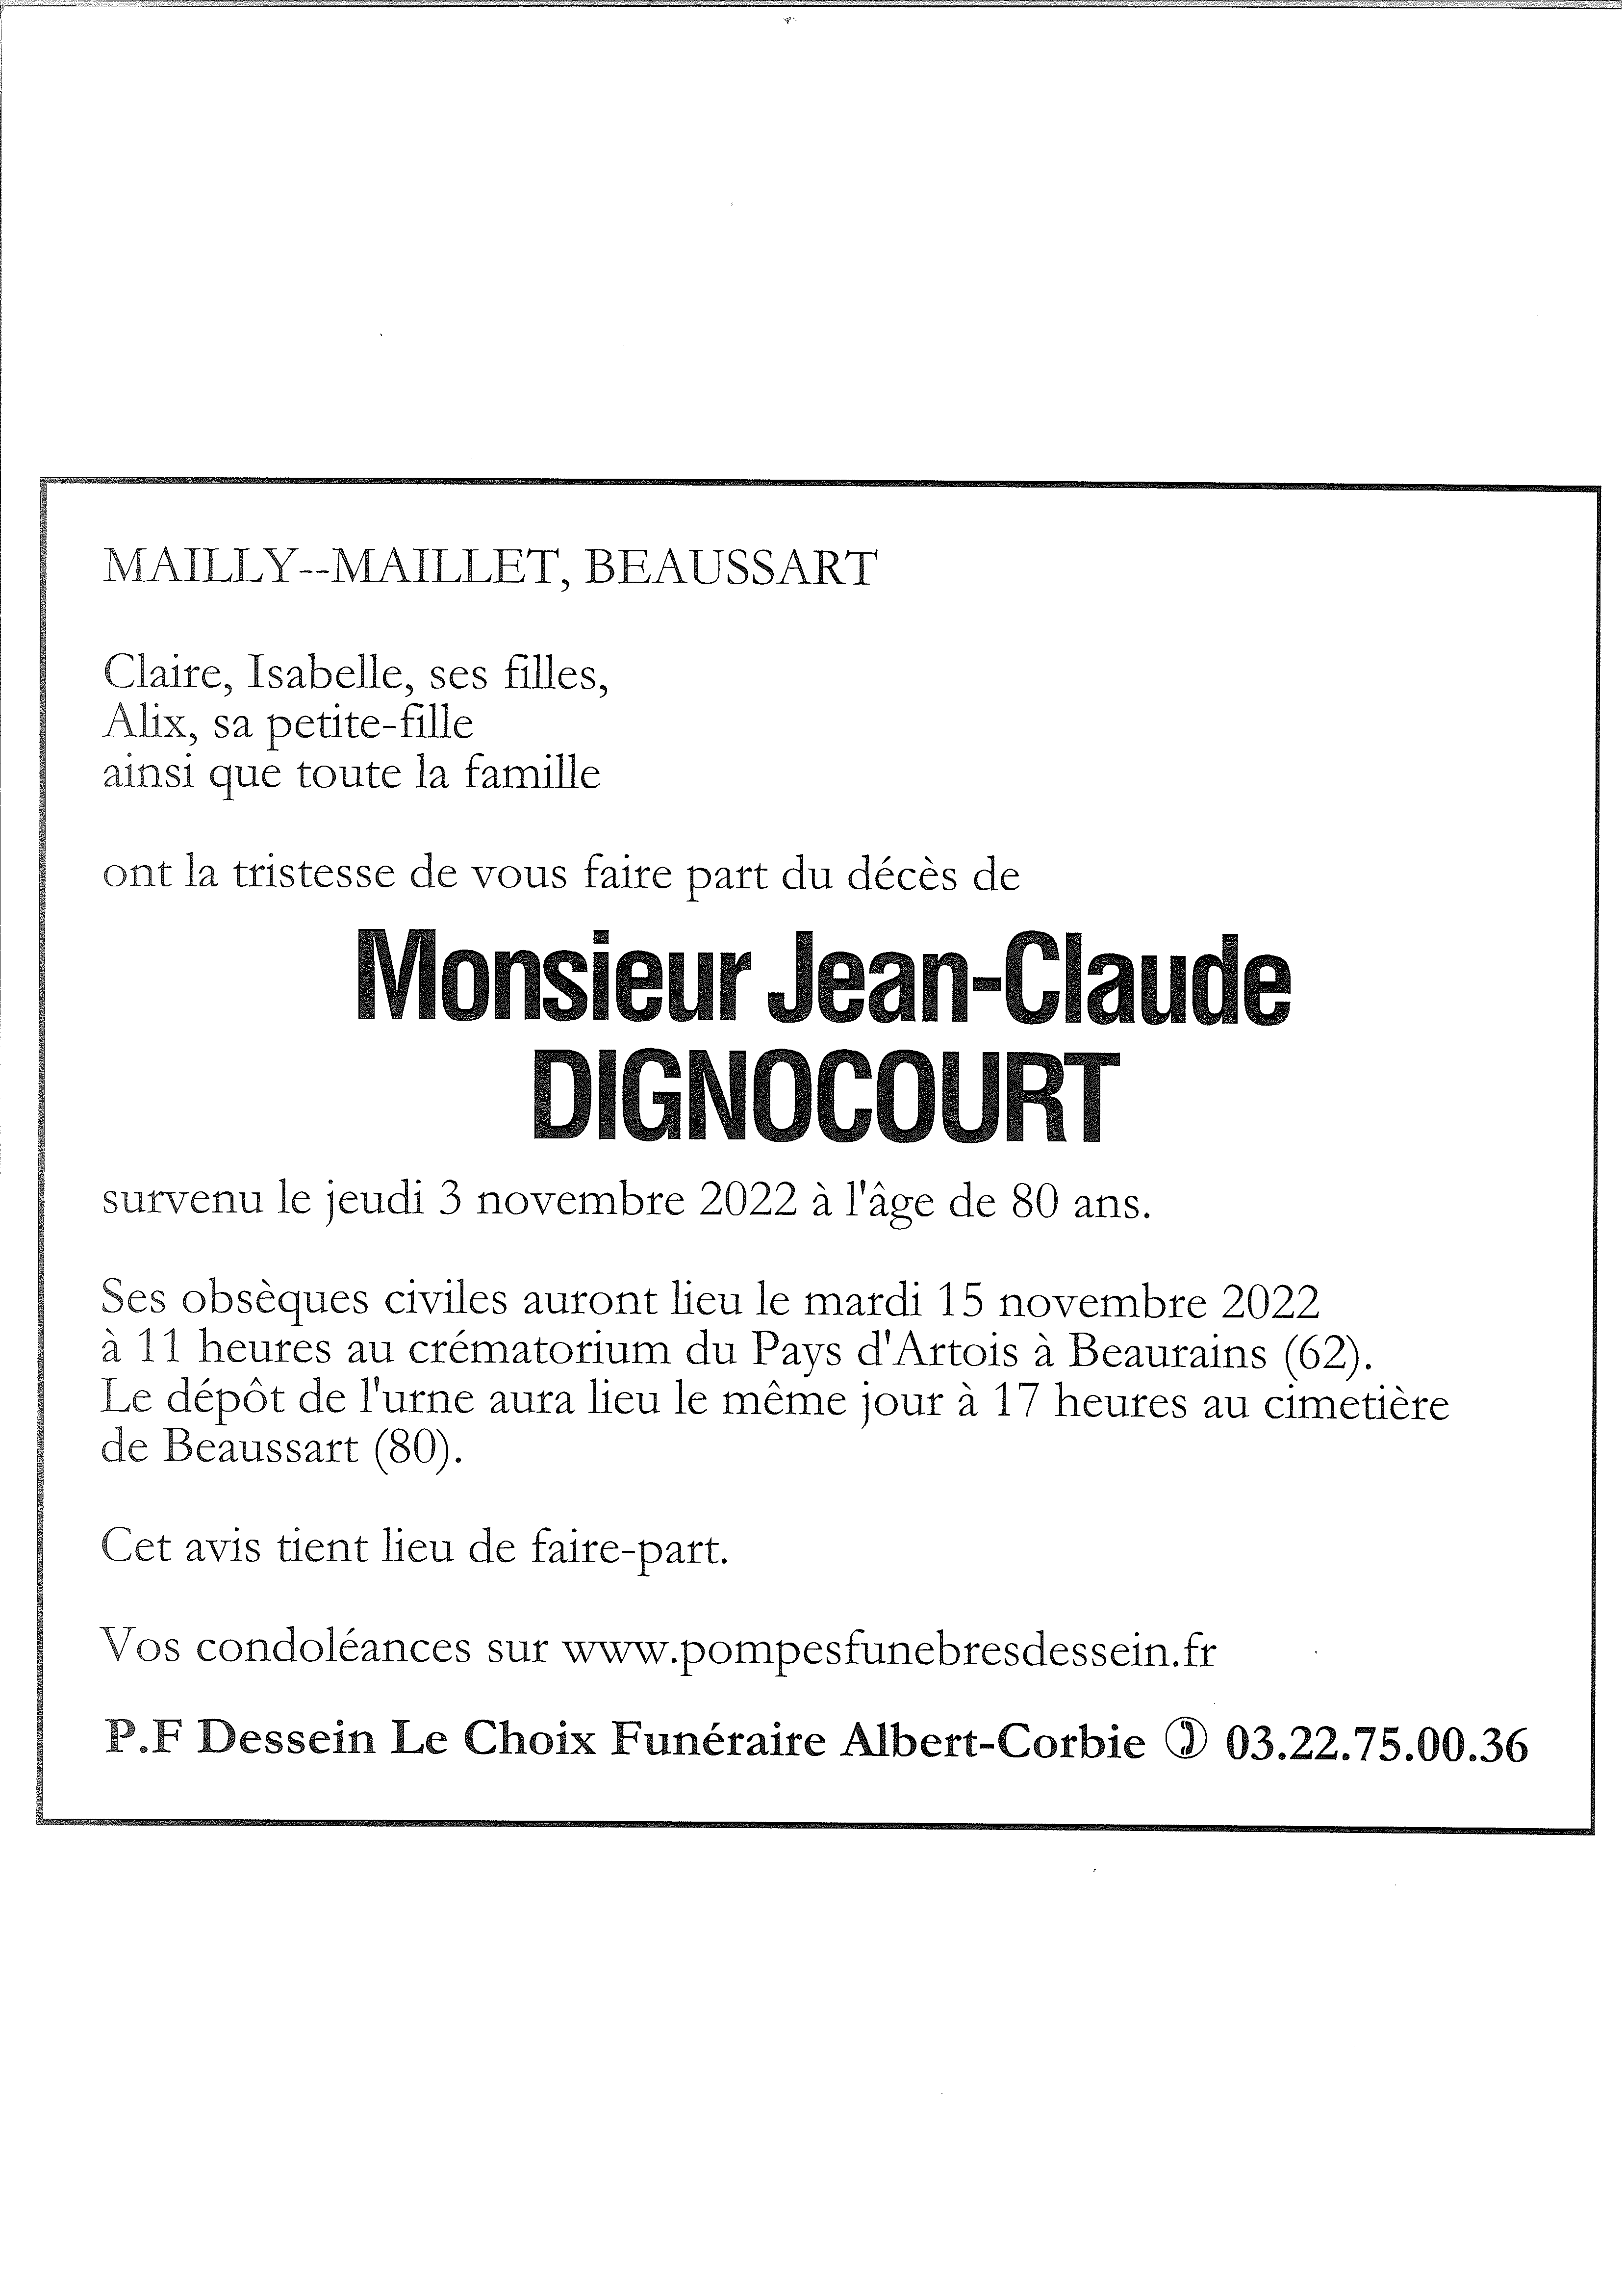 avis de deces de Monsieur Jean-Claude DIGNOCOURT